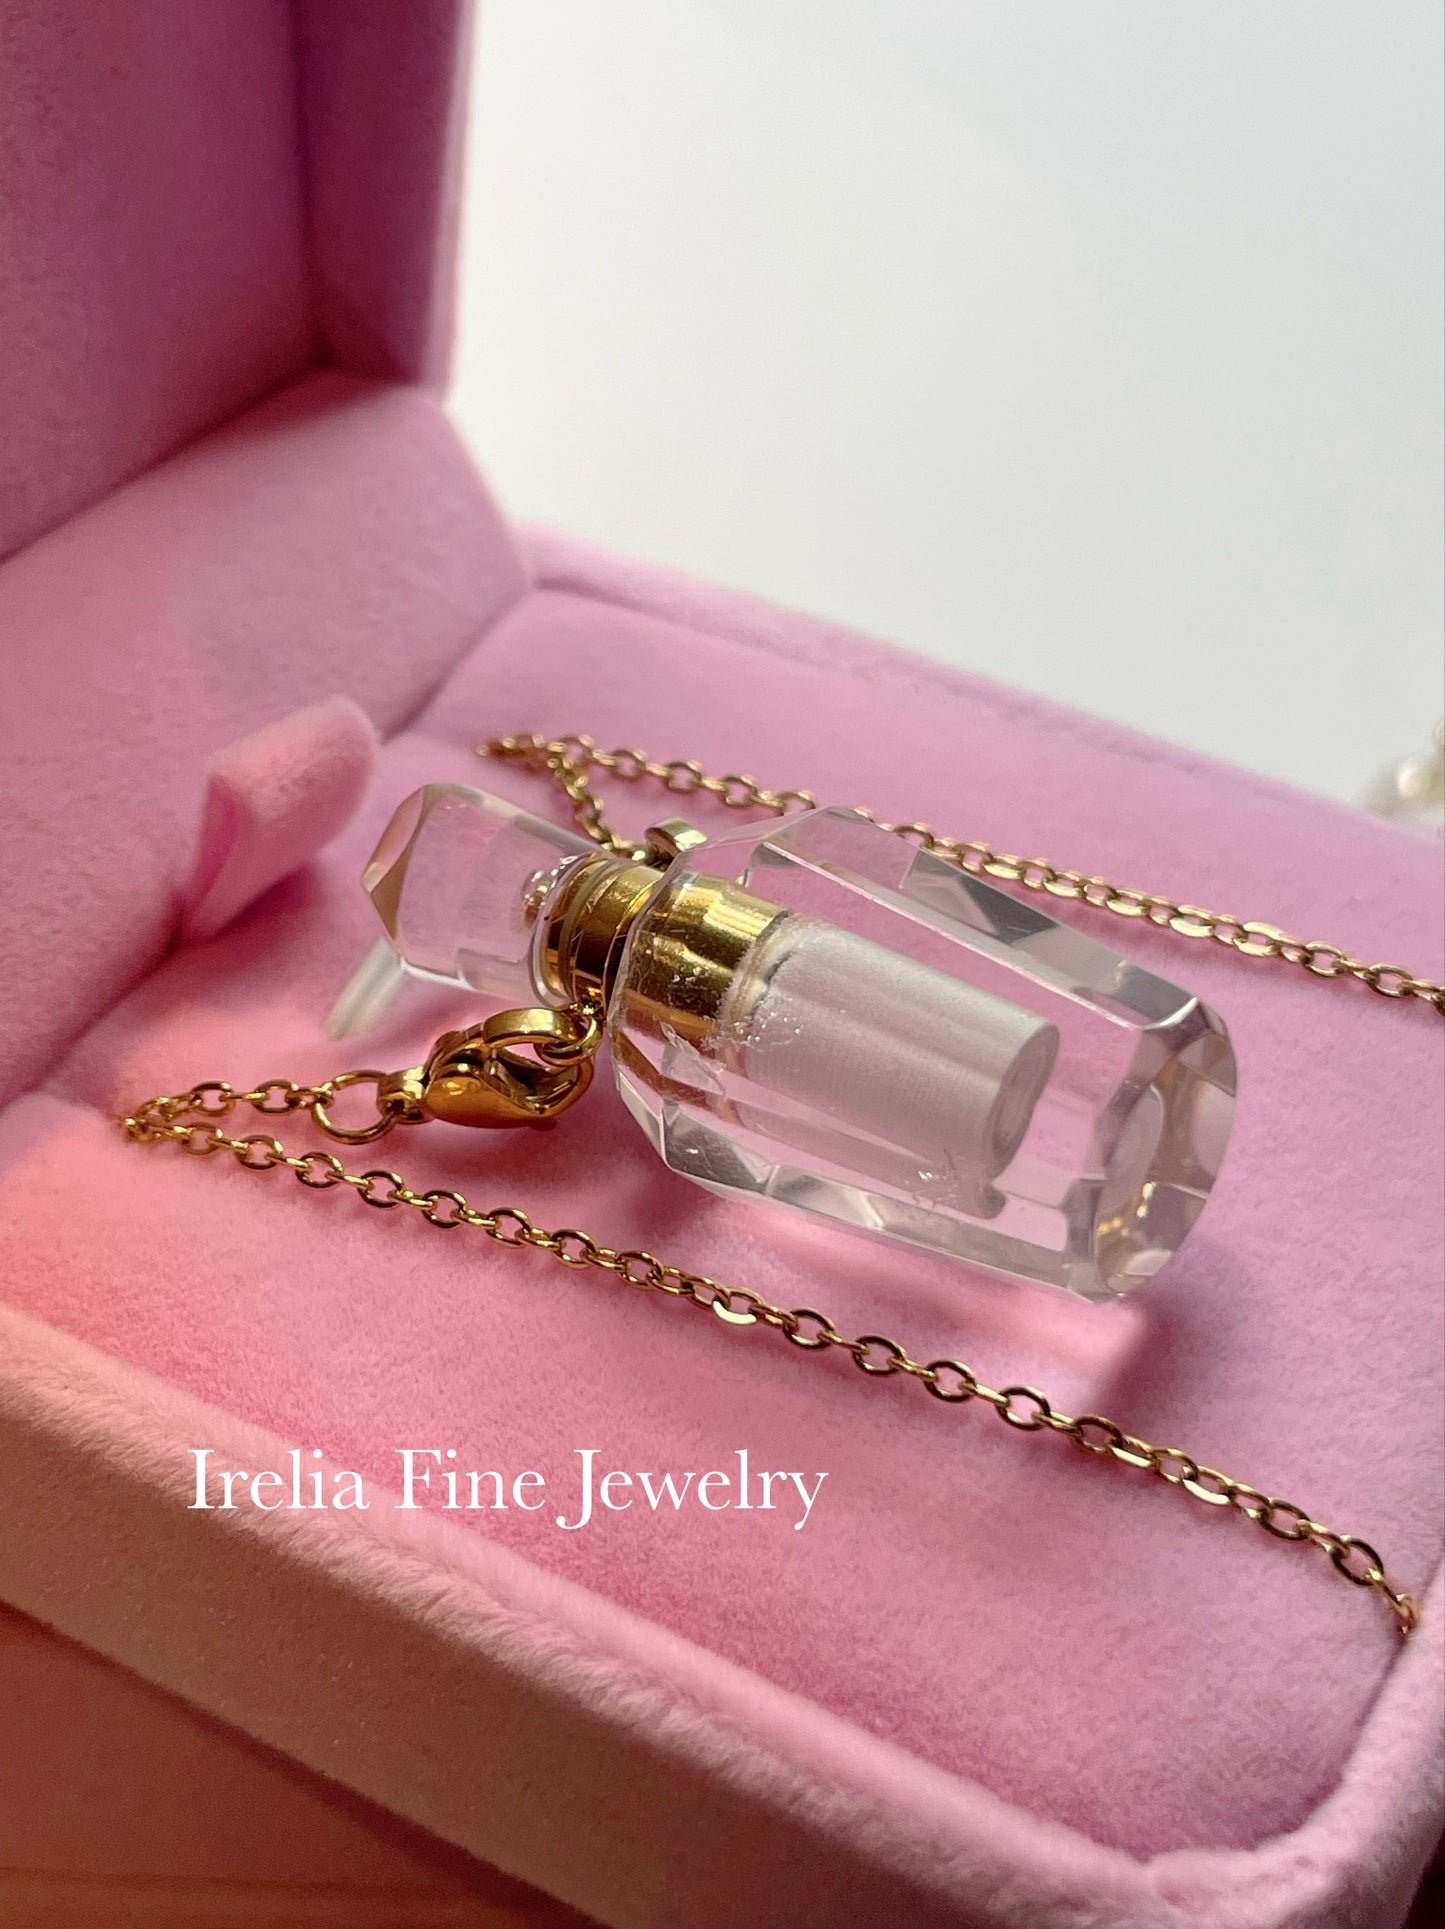 Facetted White Quartz Bottle holds Perfume or Essential Oils